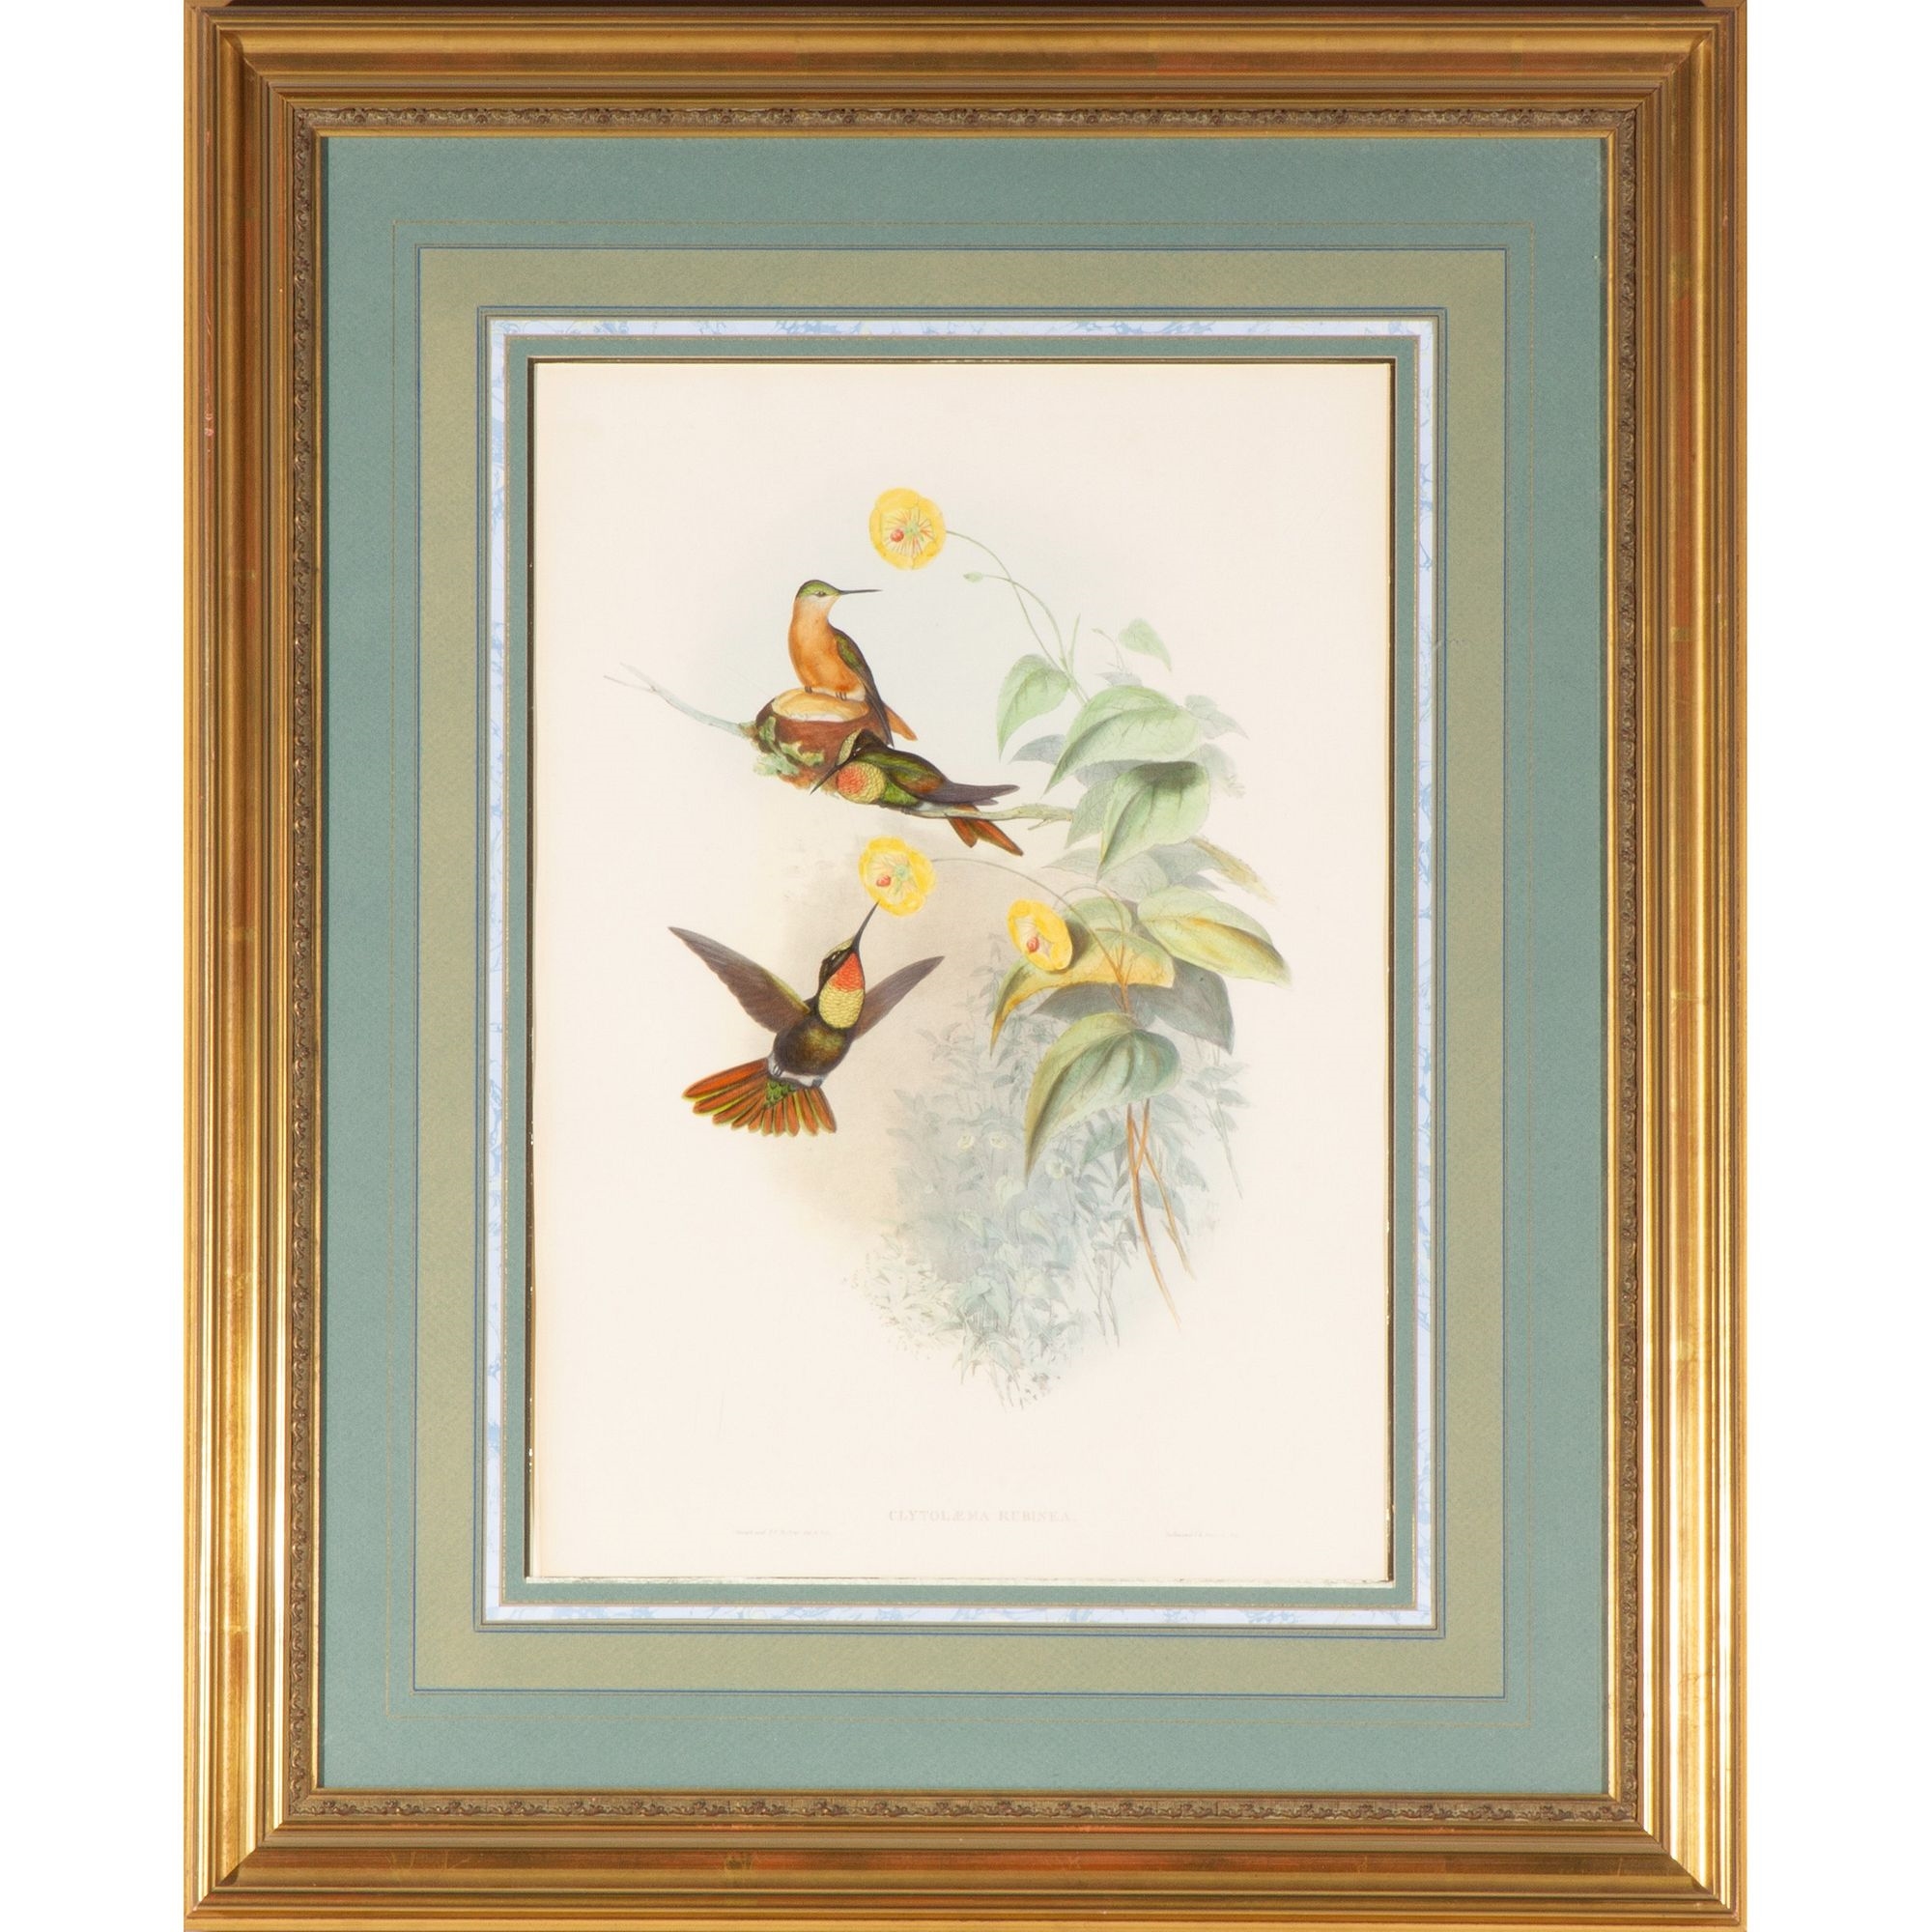 Hummingbird by John Gould, 1851